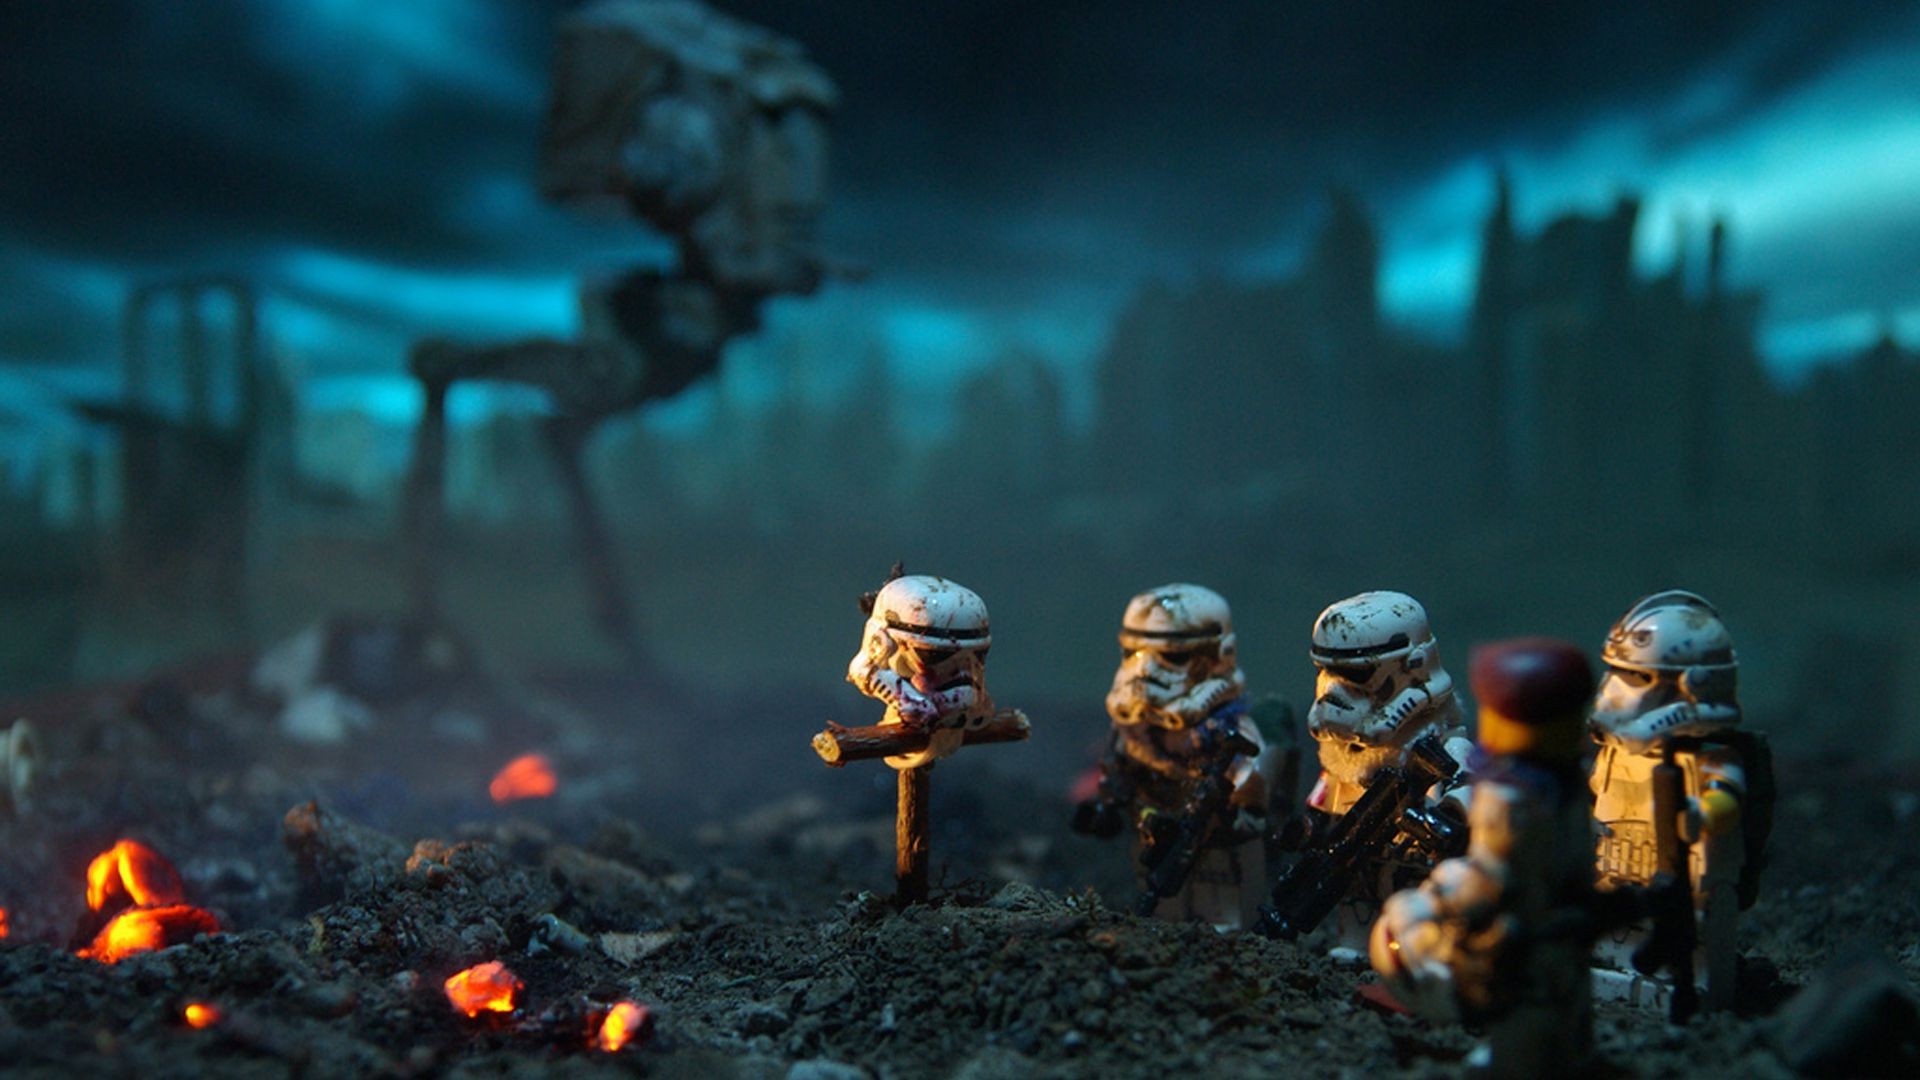 Lego Star Wars Wallpaper HD